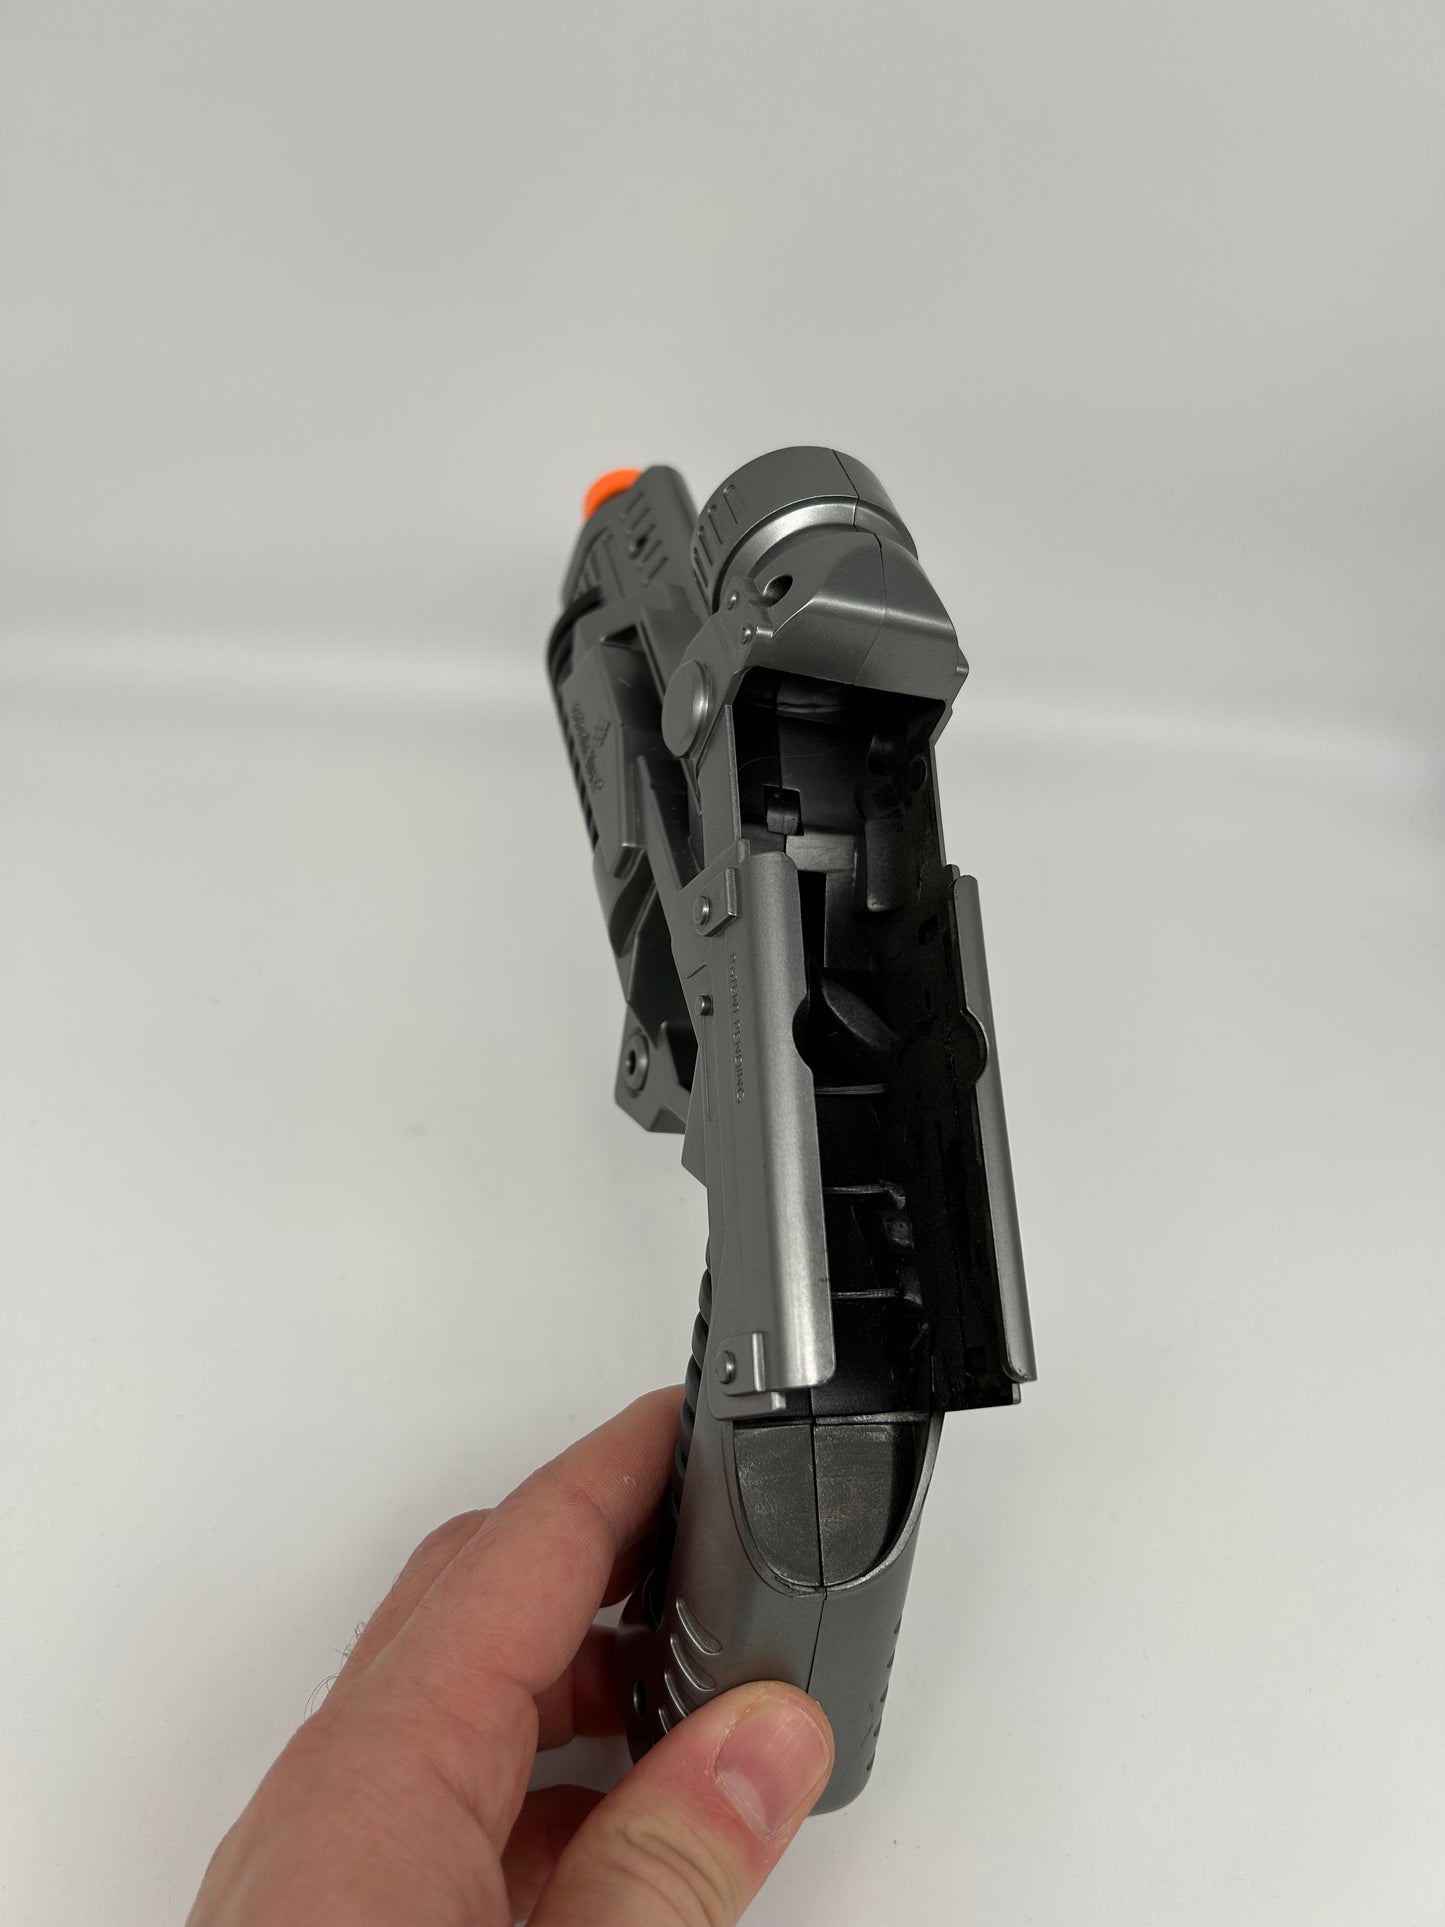 NiNTENDO Wii | RIFLE LiGHT GUN ZAPPER COBALT FLUX DARK OPS LOCKN LOAD